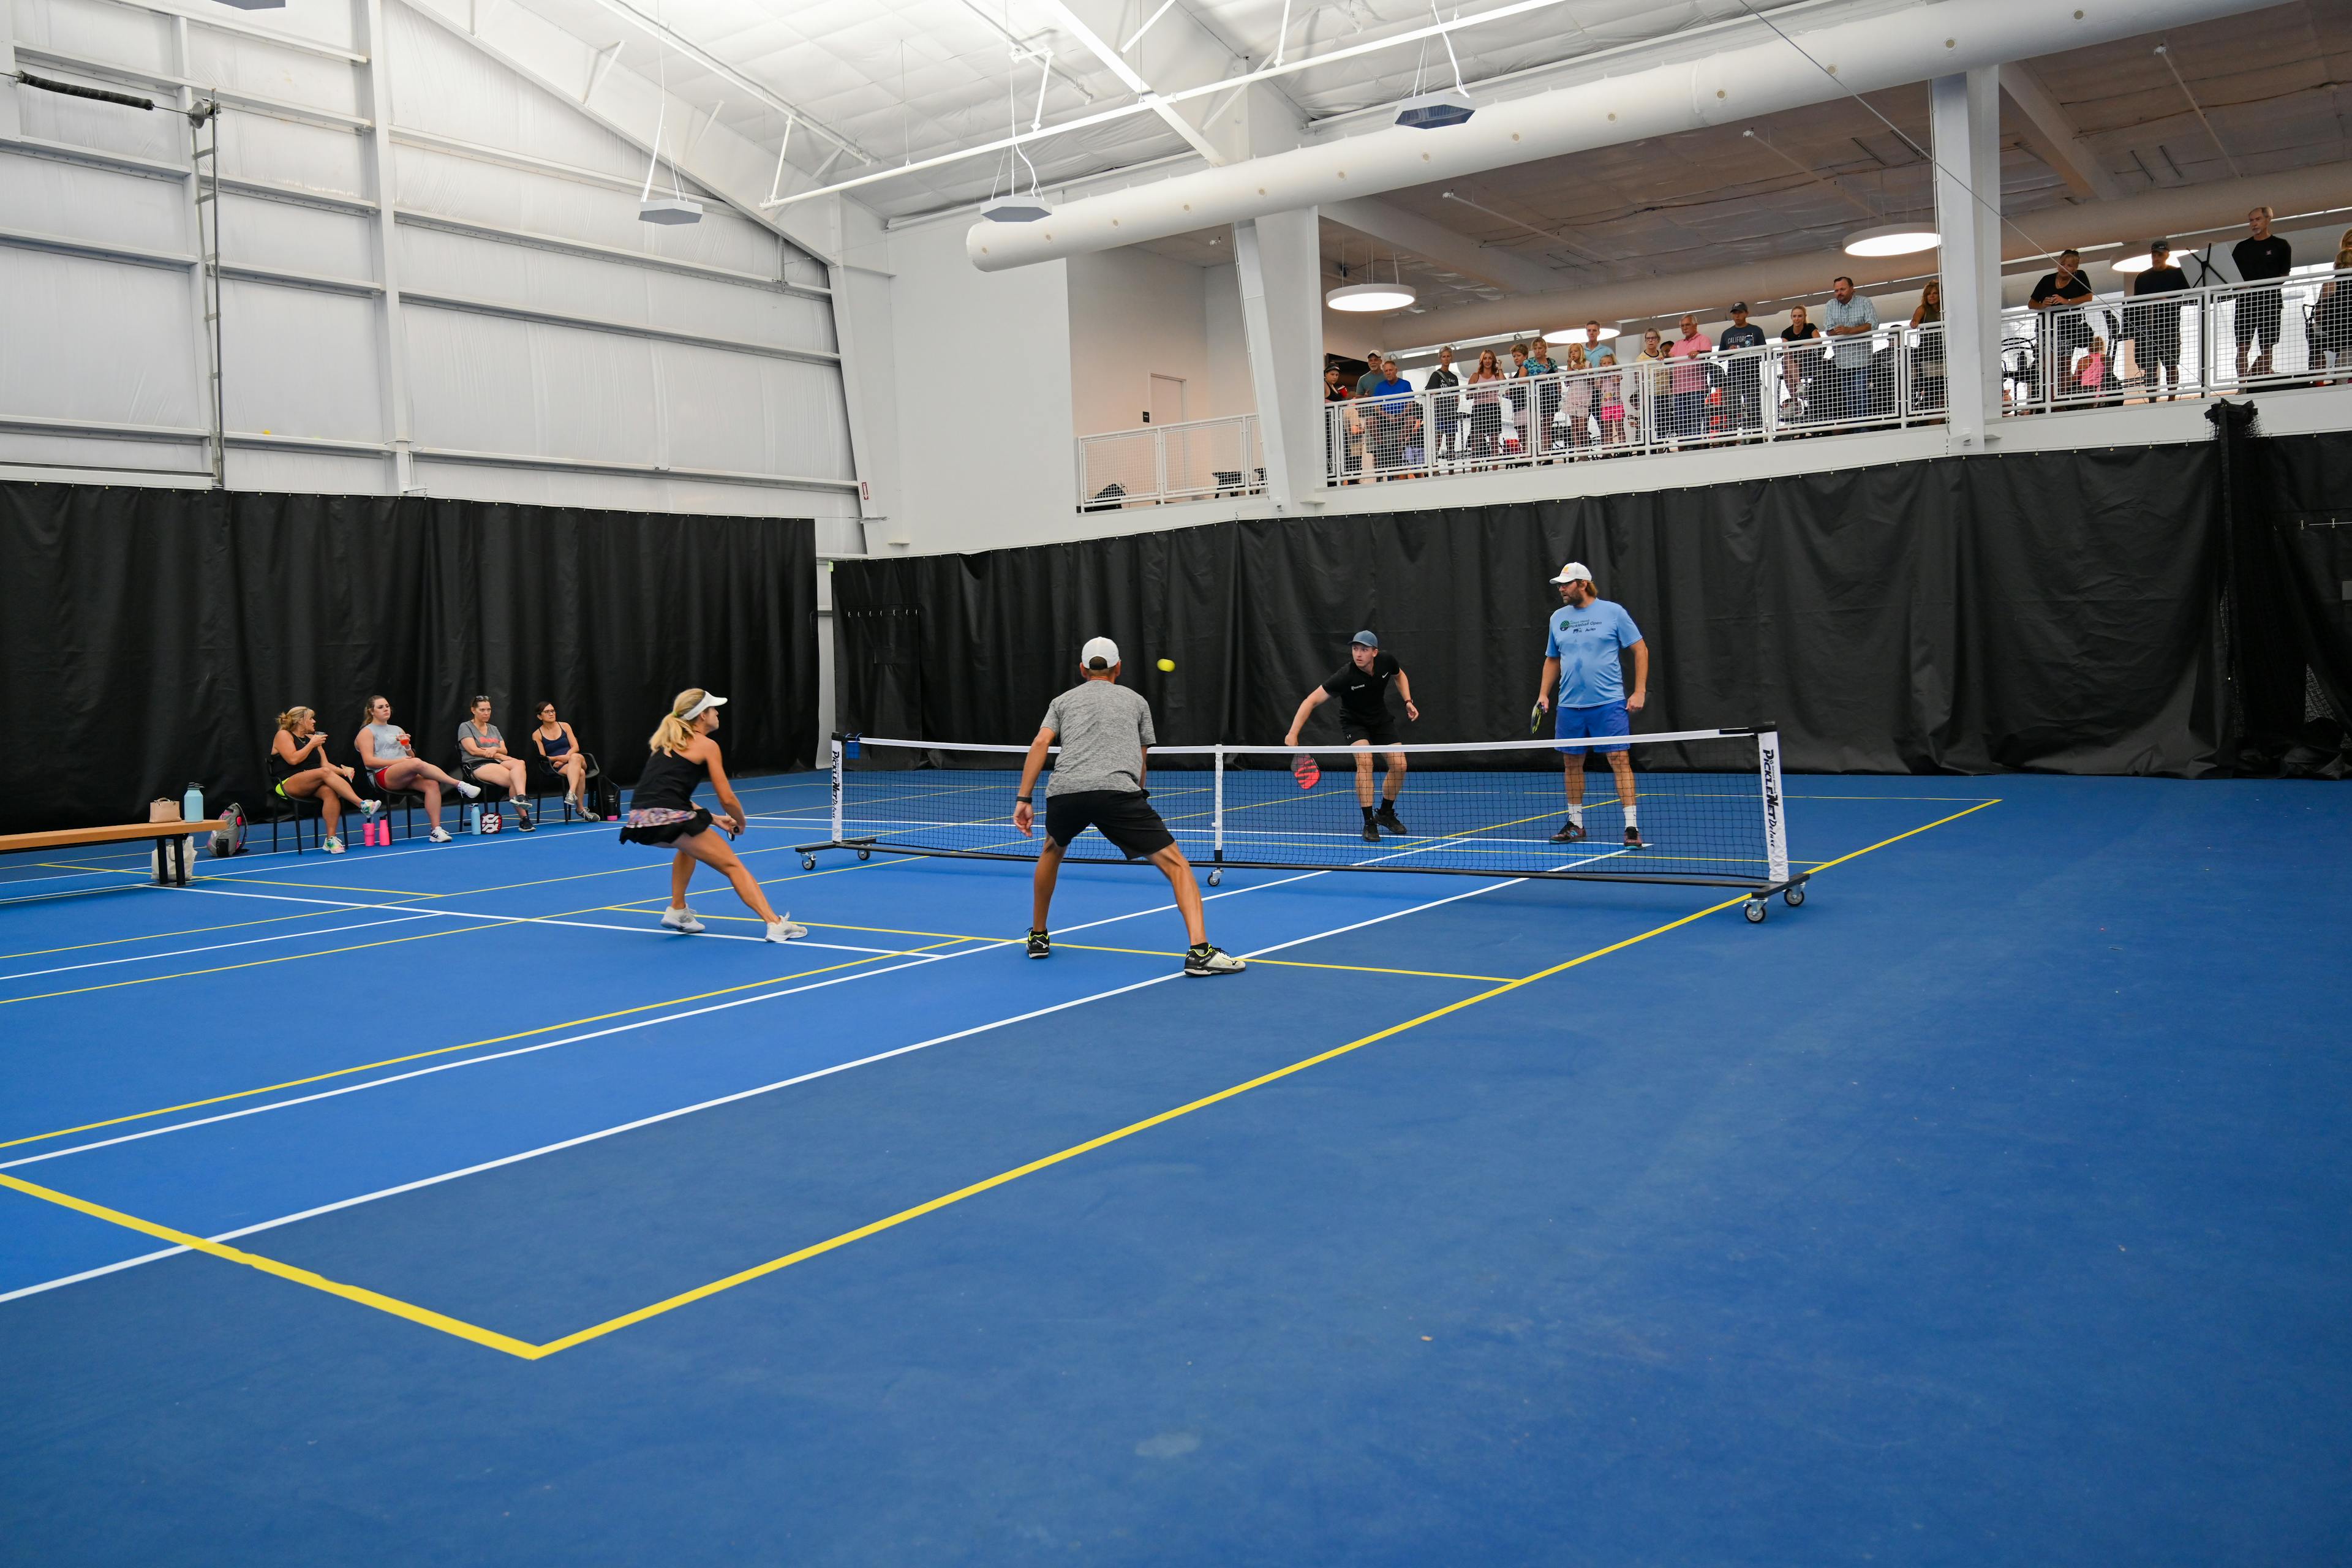 Image 2 of 8 of Matrix Racquet Club court